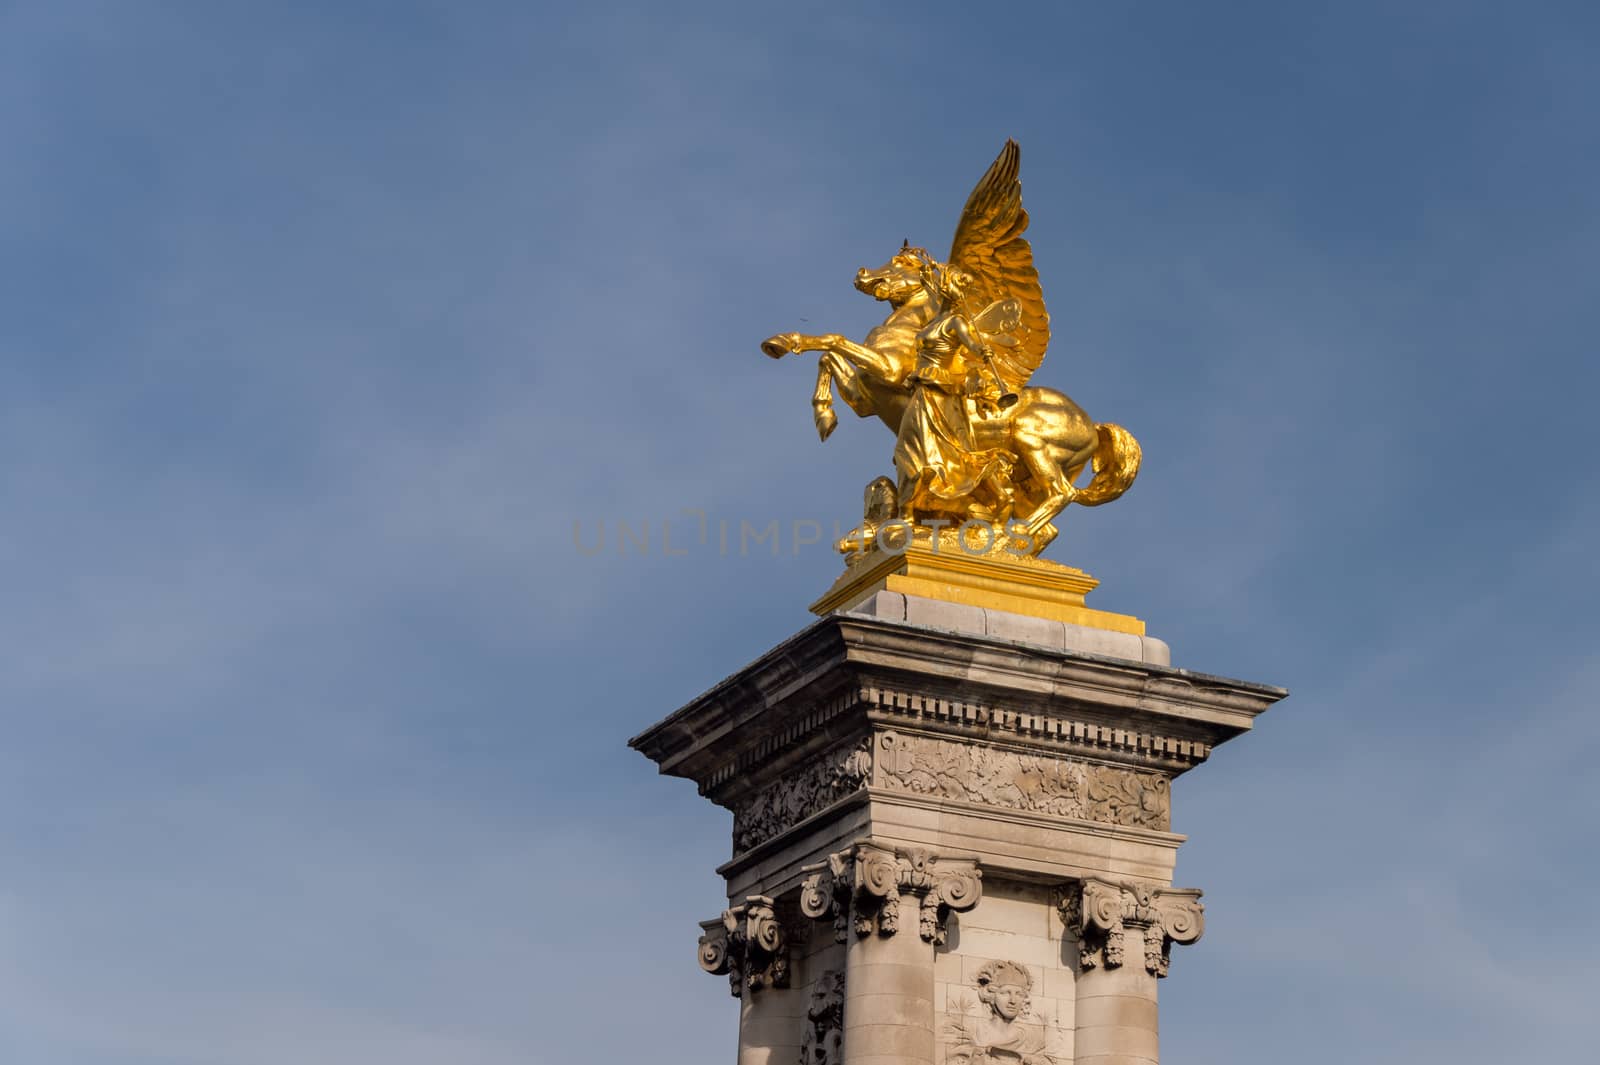 Sculpture on Pont Alexandre III bridge in Paris by mbruxelle